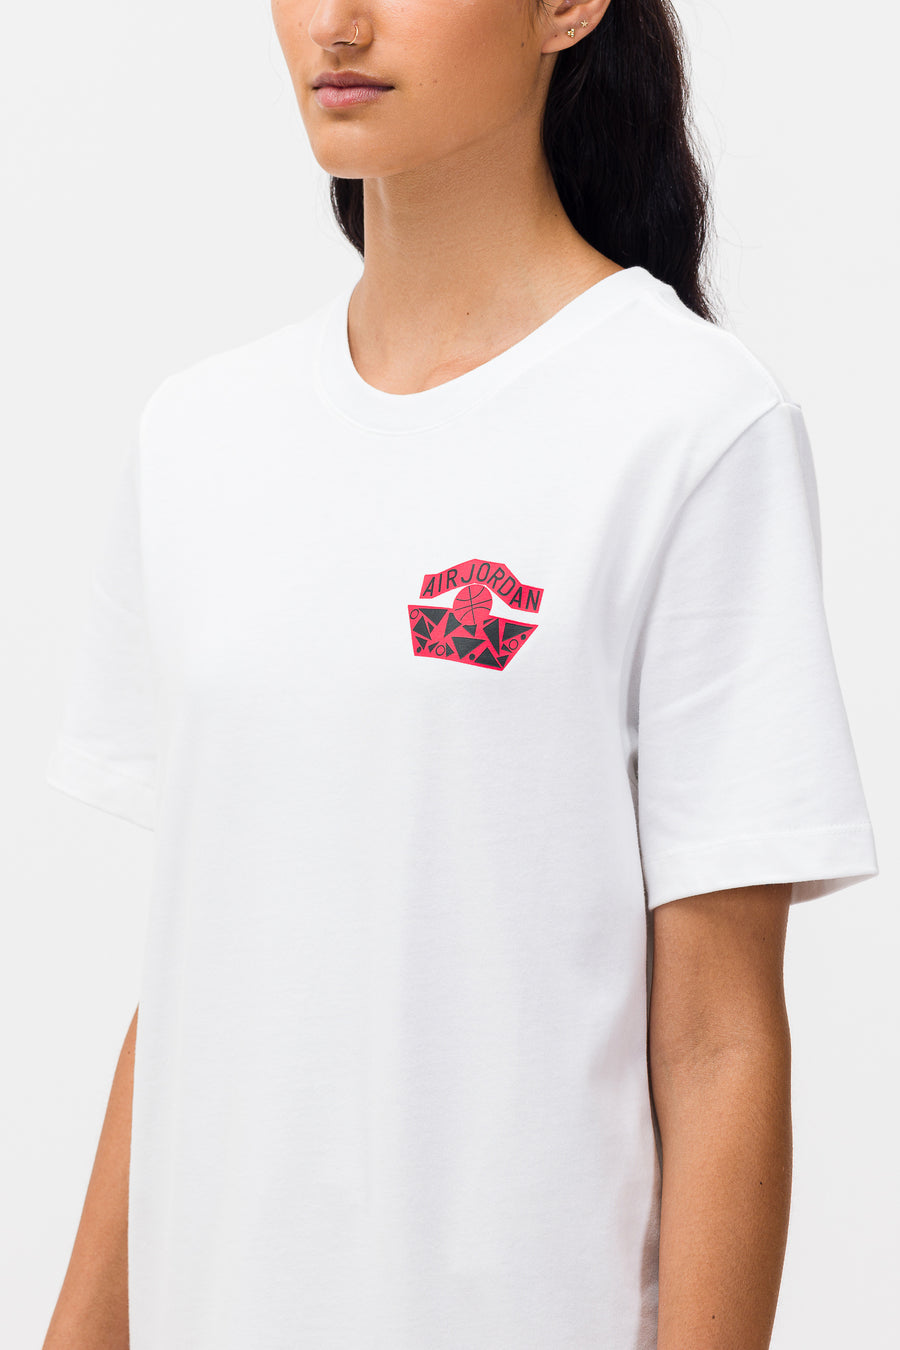 Nina Chanel Abney Logo T-Shirt in White L / White by Jordan - Notre